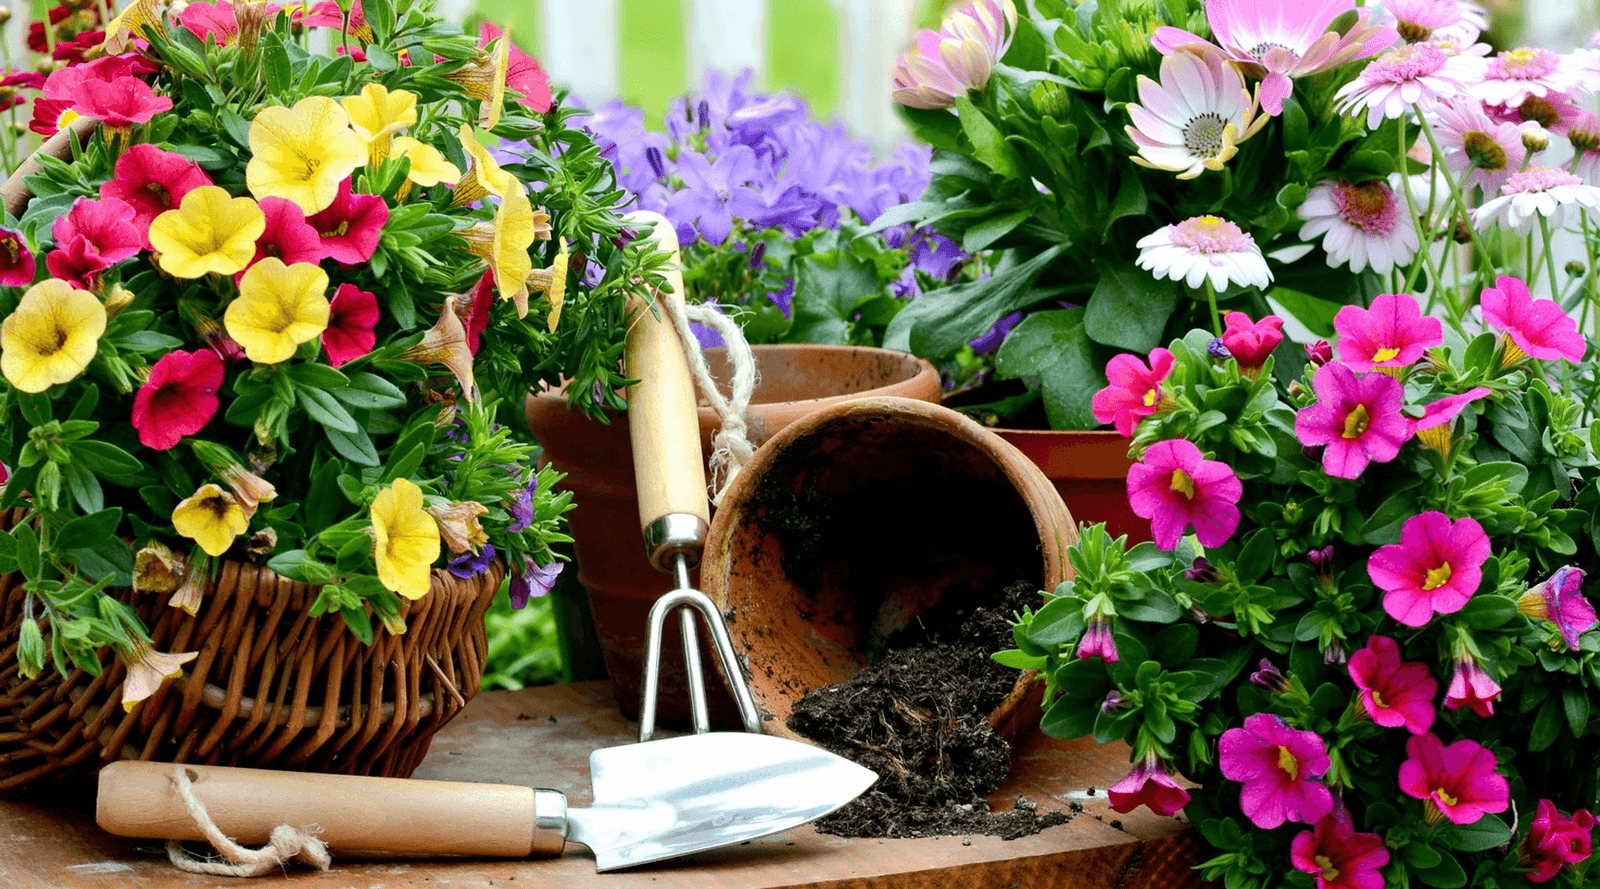 Decoupage Paper Napkins of backyard Garden Summer Flowers with Wheelbarrow  and Bird